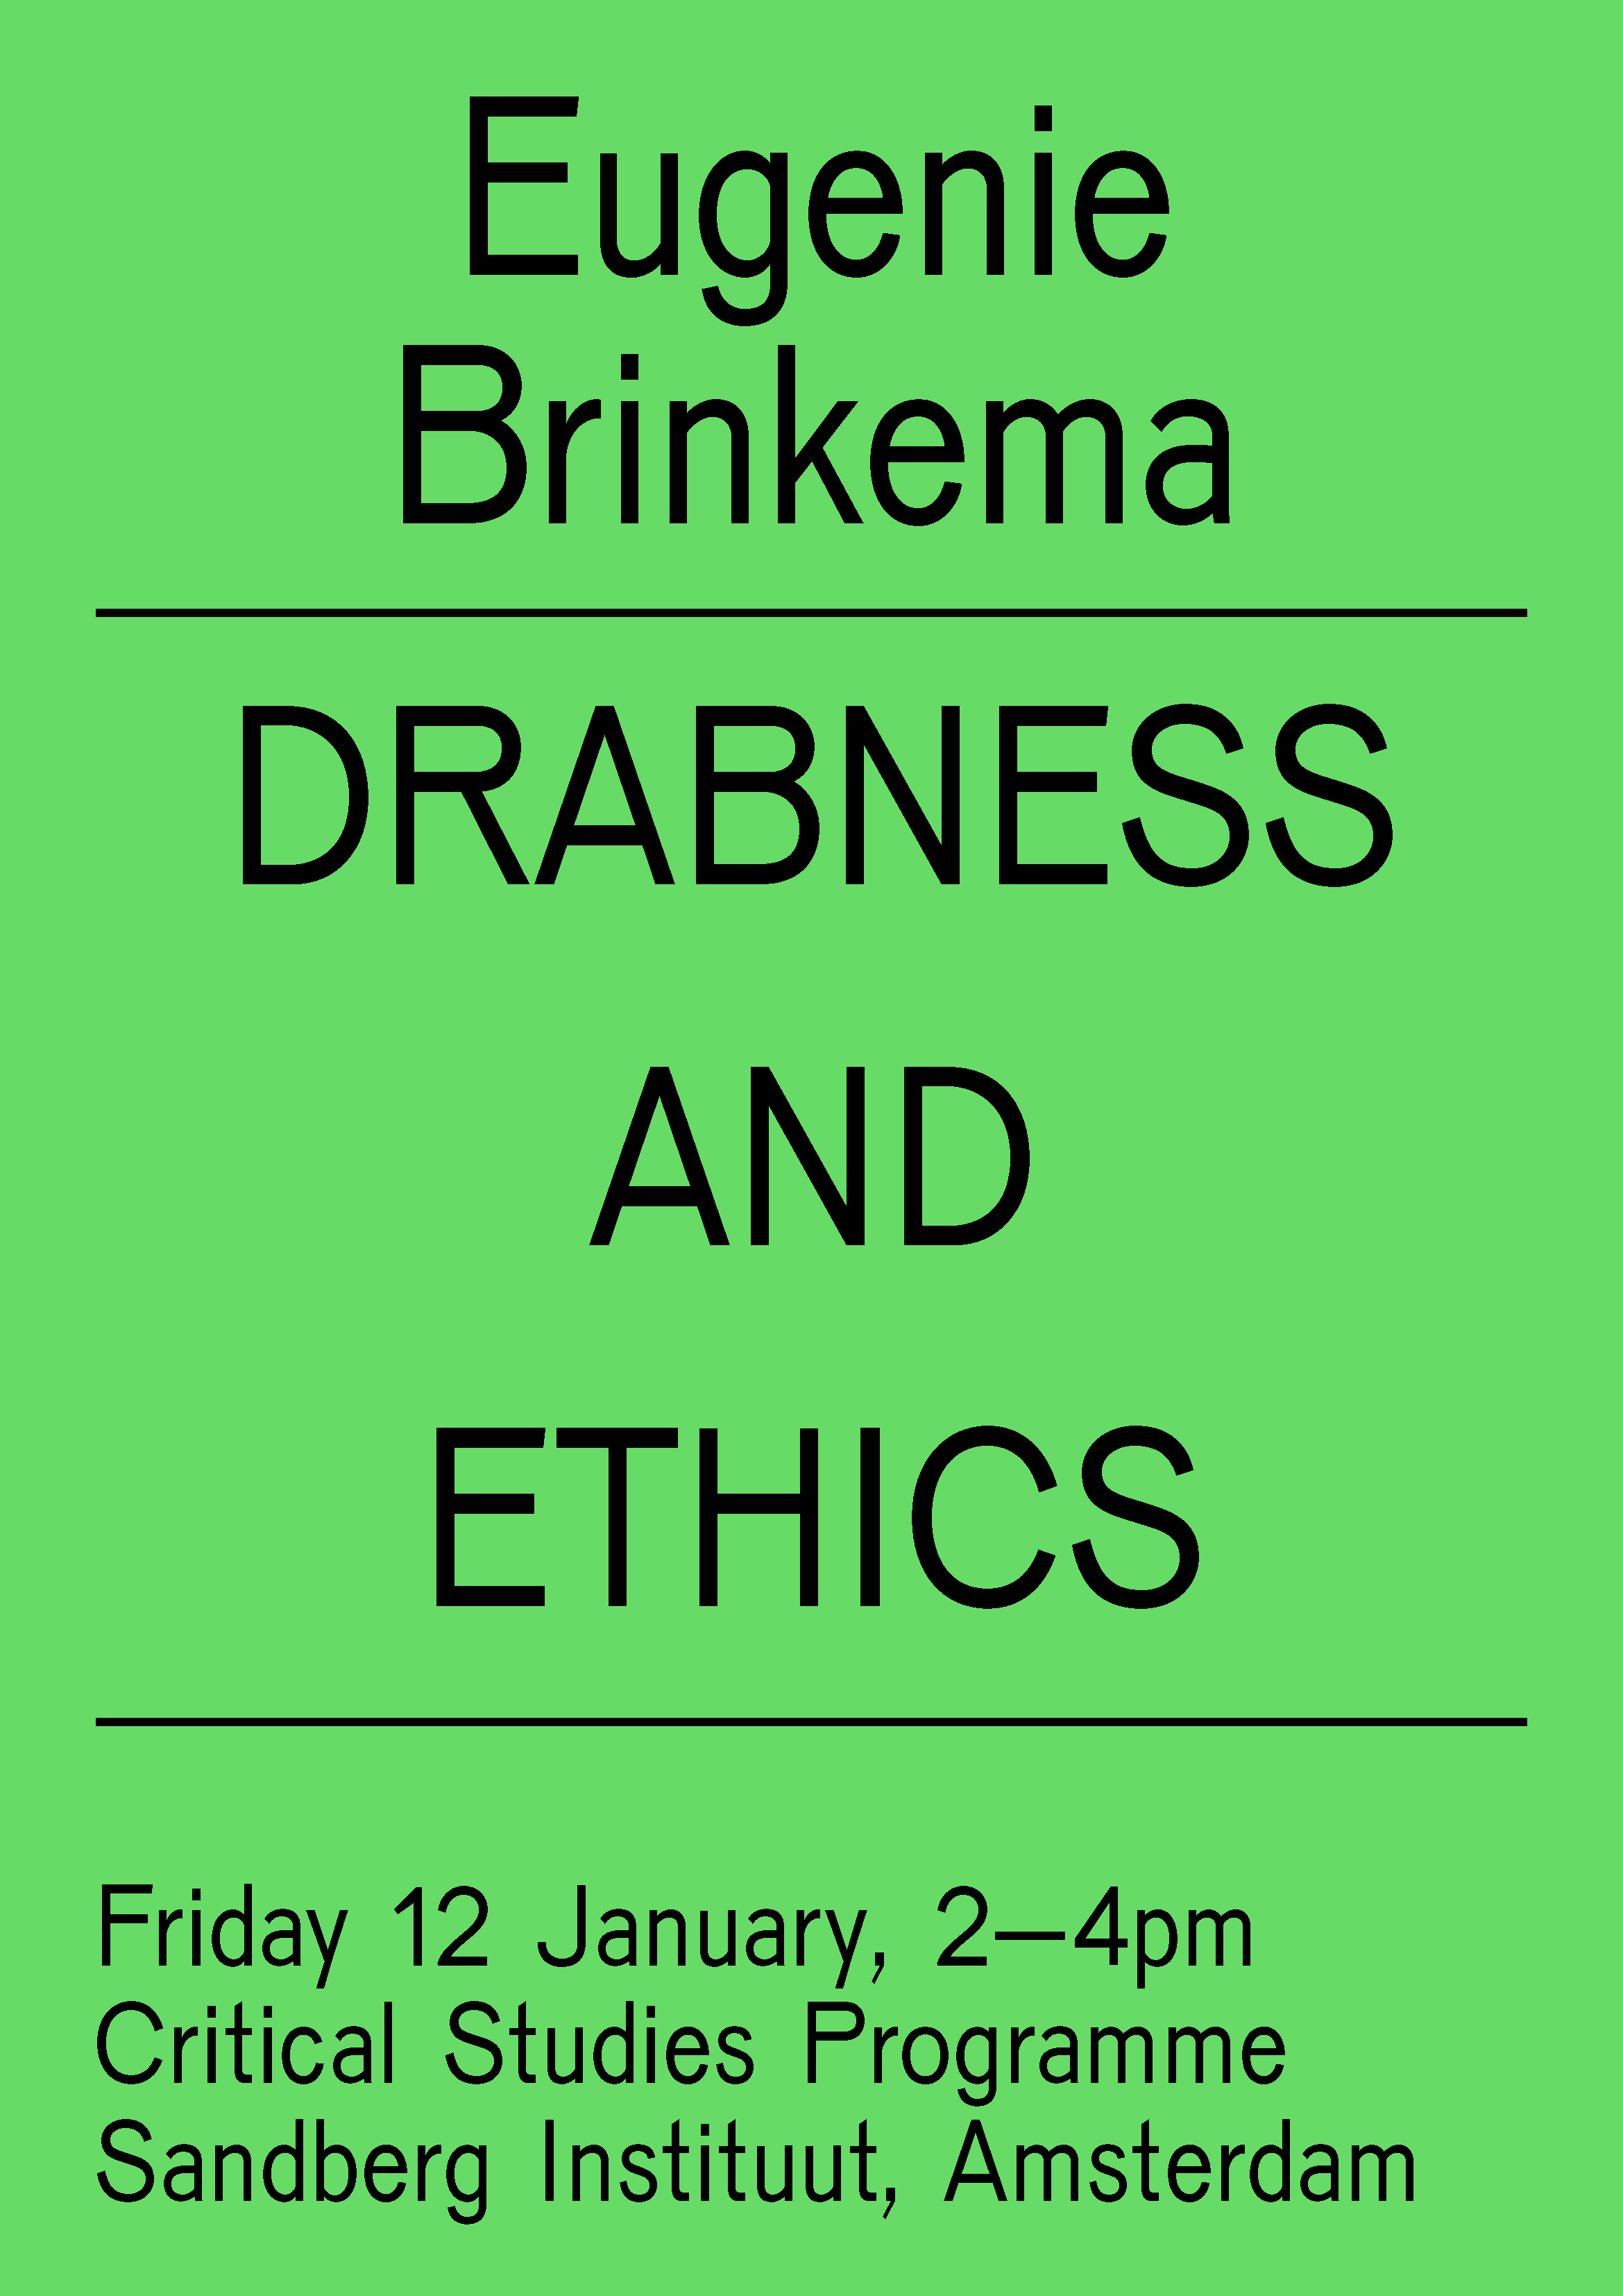 Sandberg Instituut Critical Studies Programme presents, Prof Eugenie Brinkema “Drabness and Ethics”